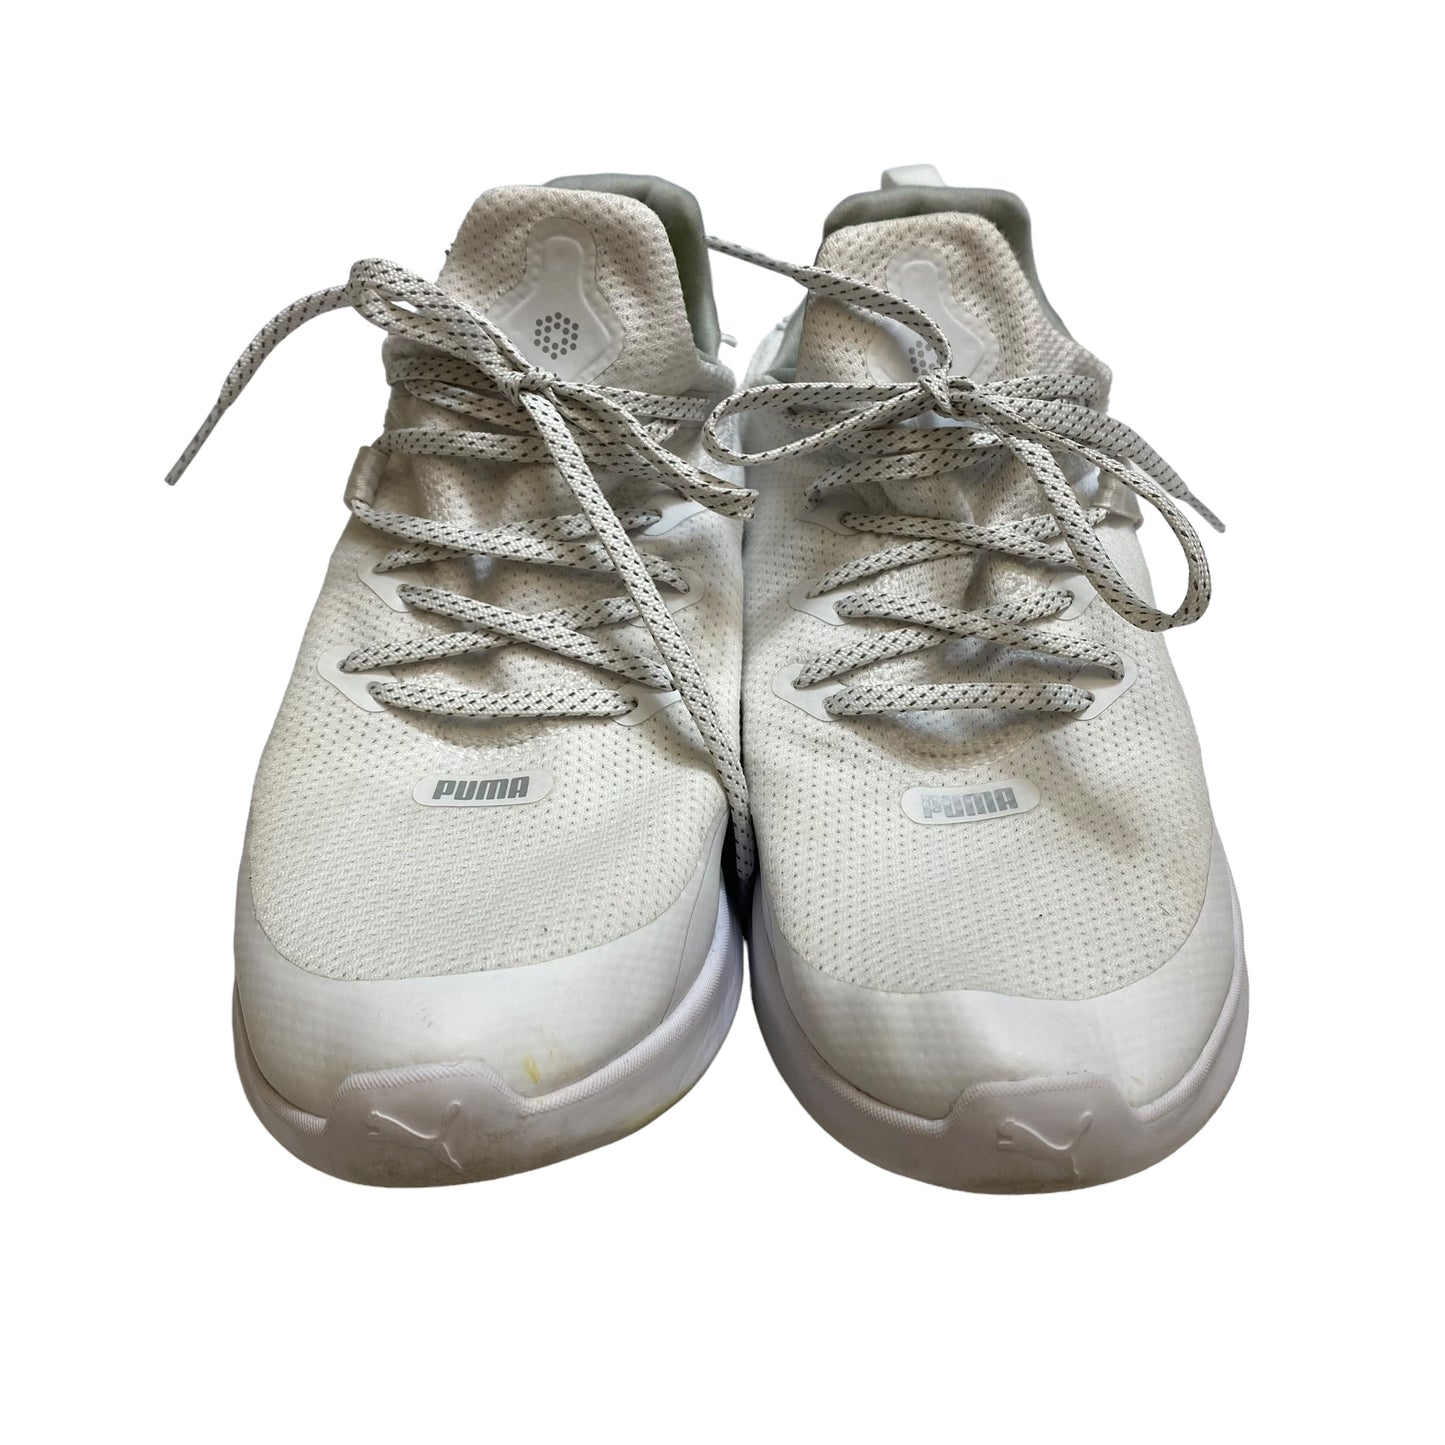 White Shoes Athletic Puma, Size 10